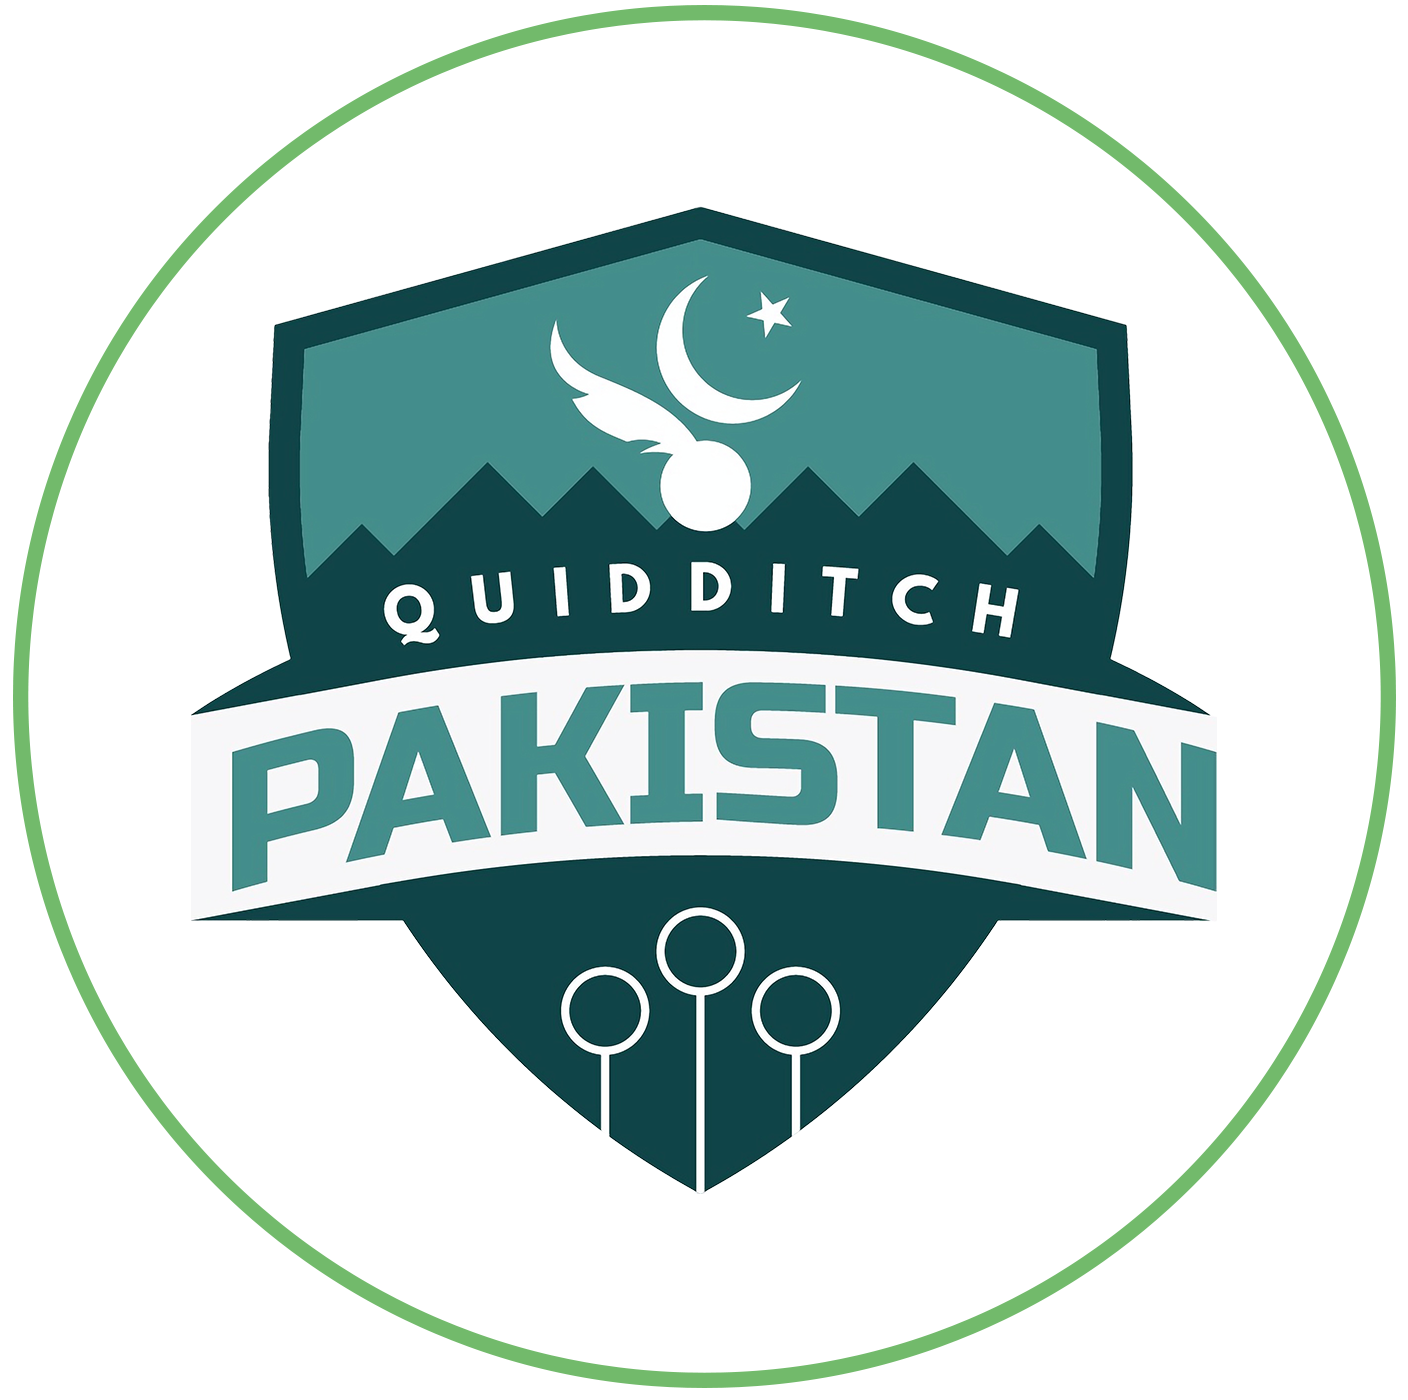 Pakistan Quadball logo